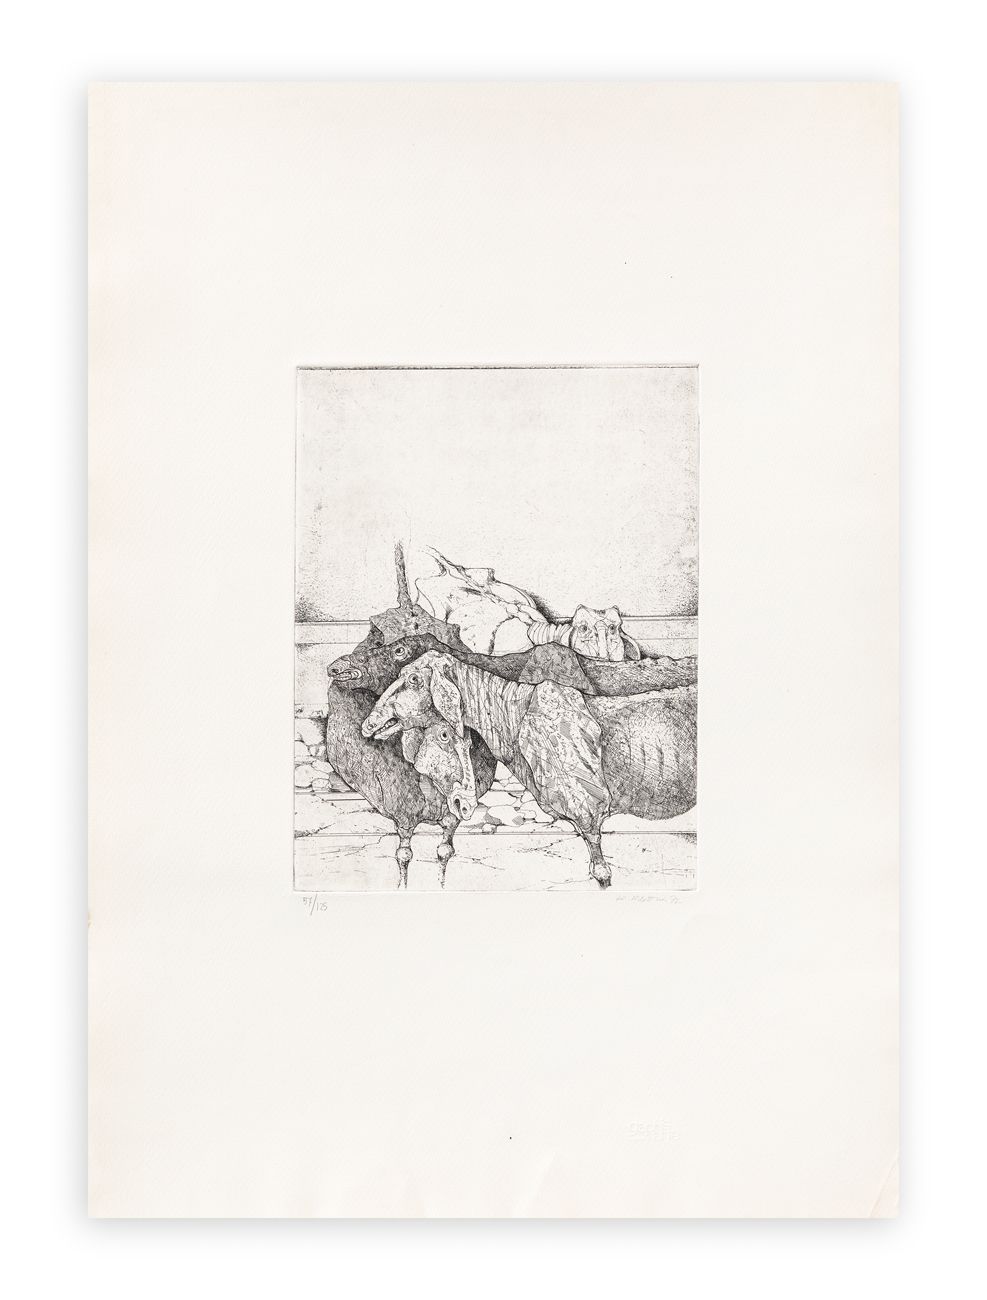 KARL PLATTNER (1919-1986) - Pecore, 1972 黑白蚀刻画
纸张32.2x24.6厘米
单张70x50
正面有铅笔签名、日期和&hellip;